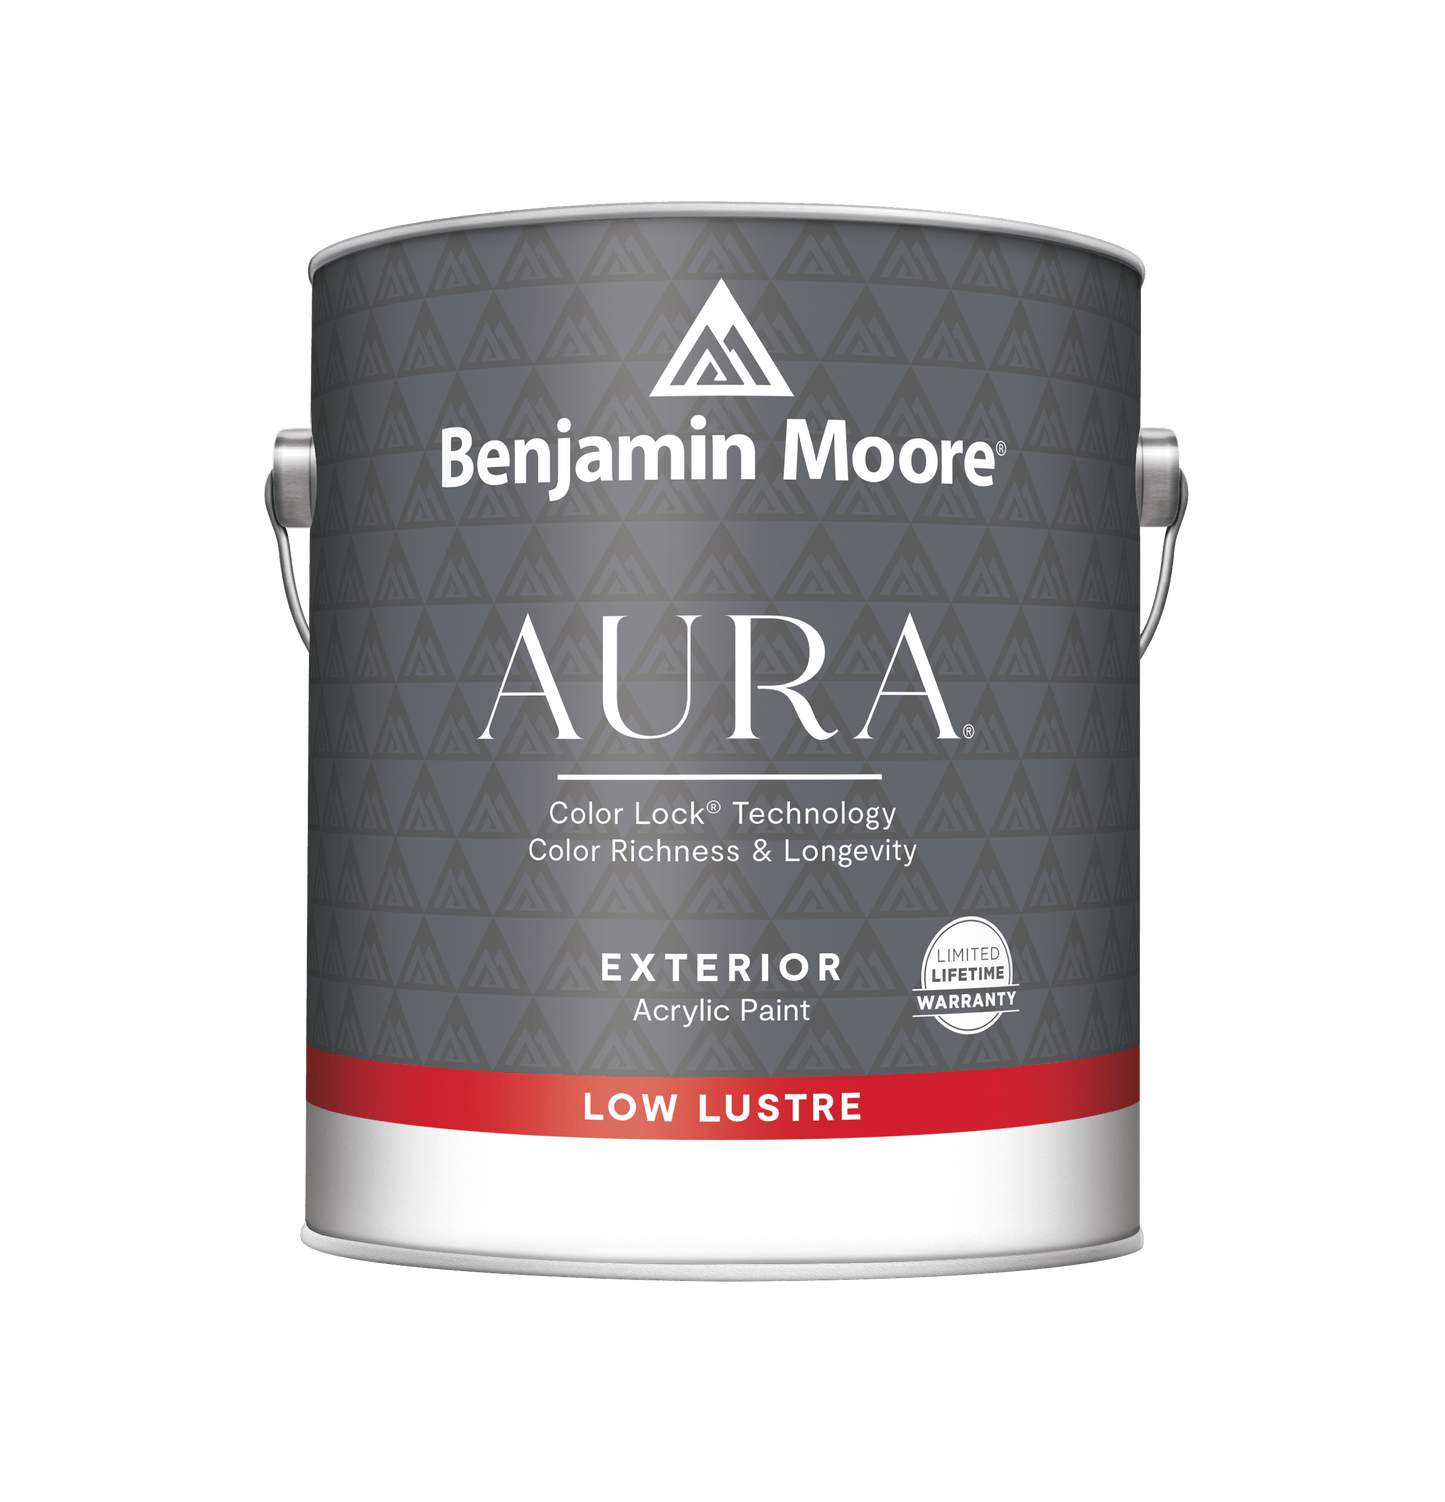 Benjamin Moore Aura - Rossi Paint Stores - Low Lustre - Gallon